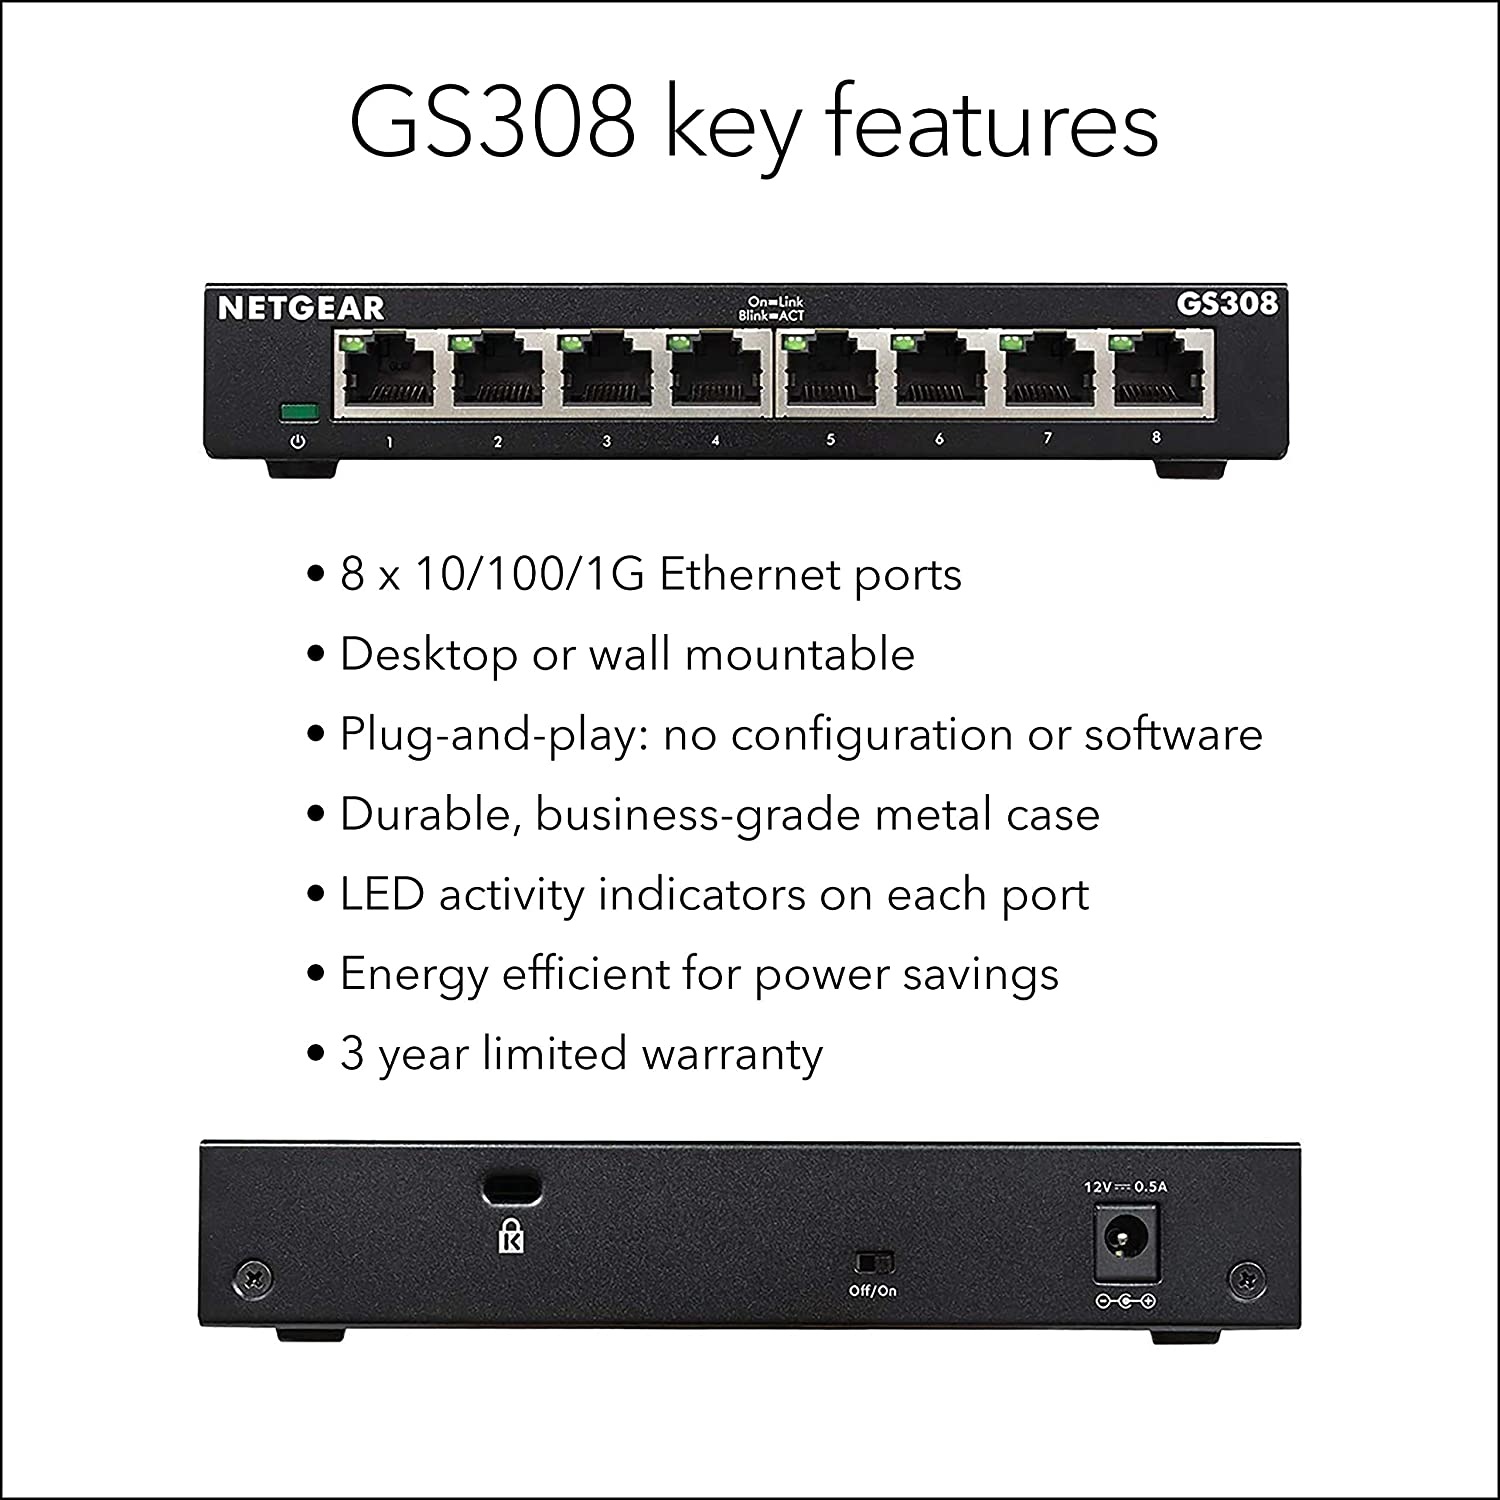 NETGEAR 8-Port Gigabit Ethernet 10/100/1000Mbps Switch (GS308